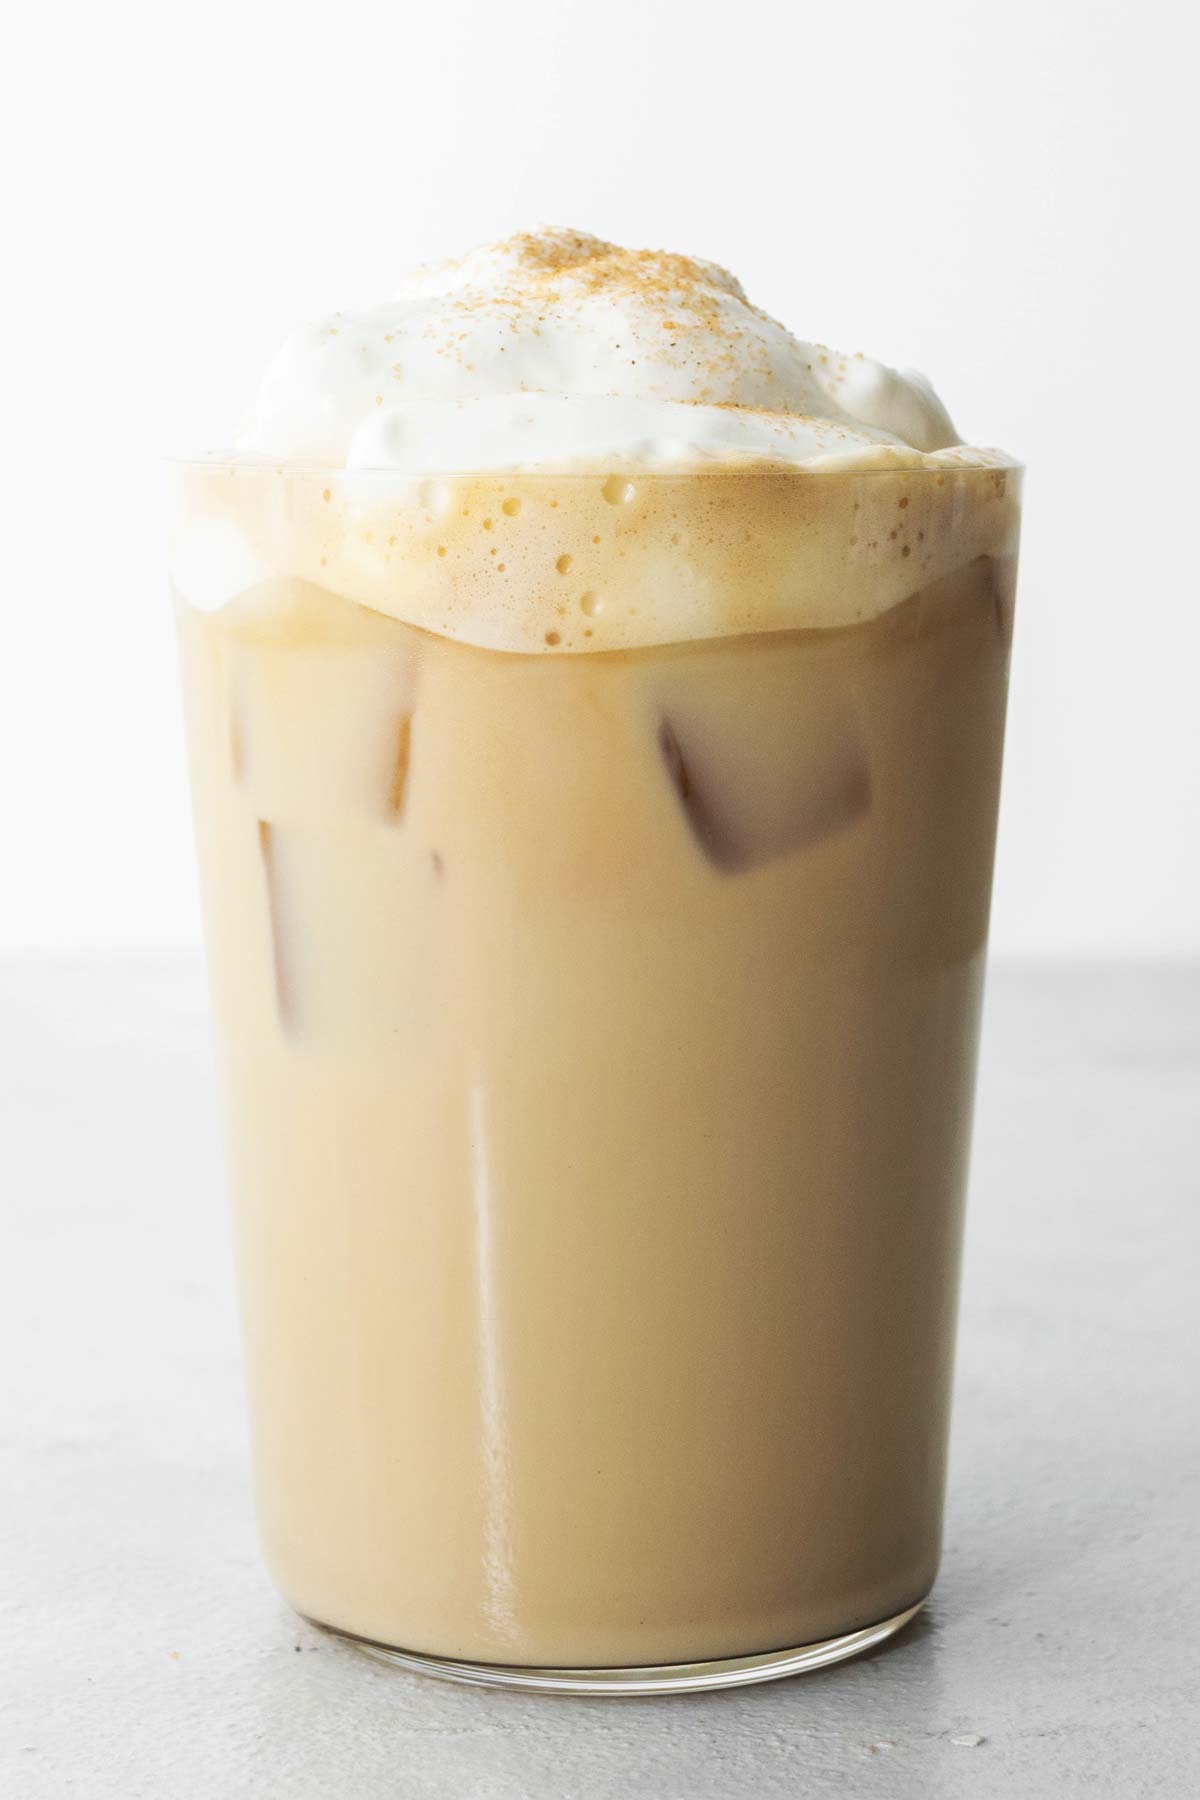 Starbucks Iced Cinnamon Dolce Latte copycat drankje in een kopje met slagroom.